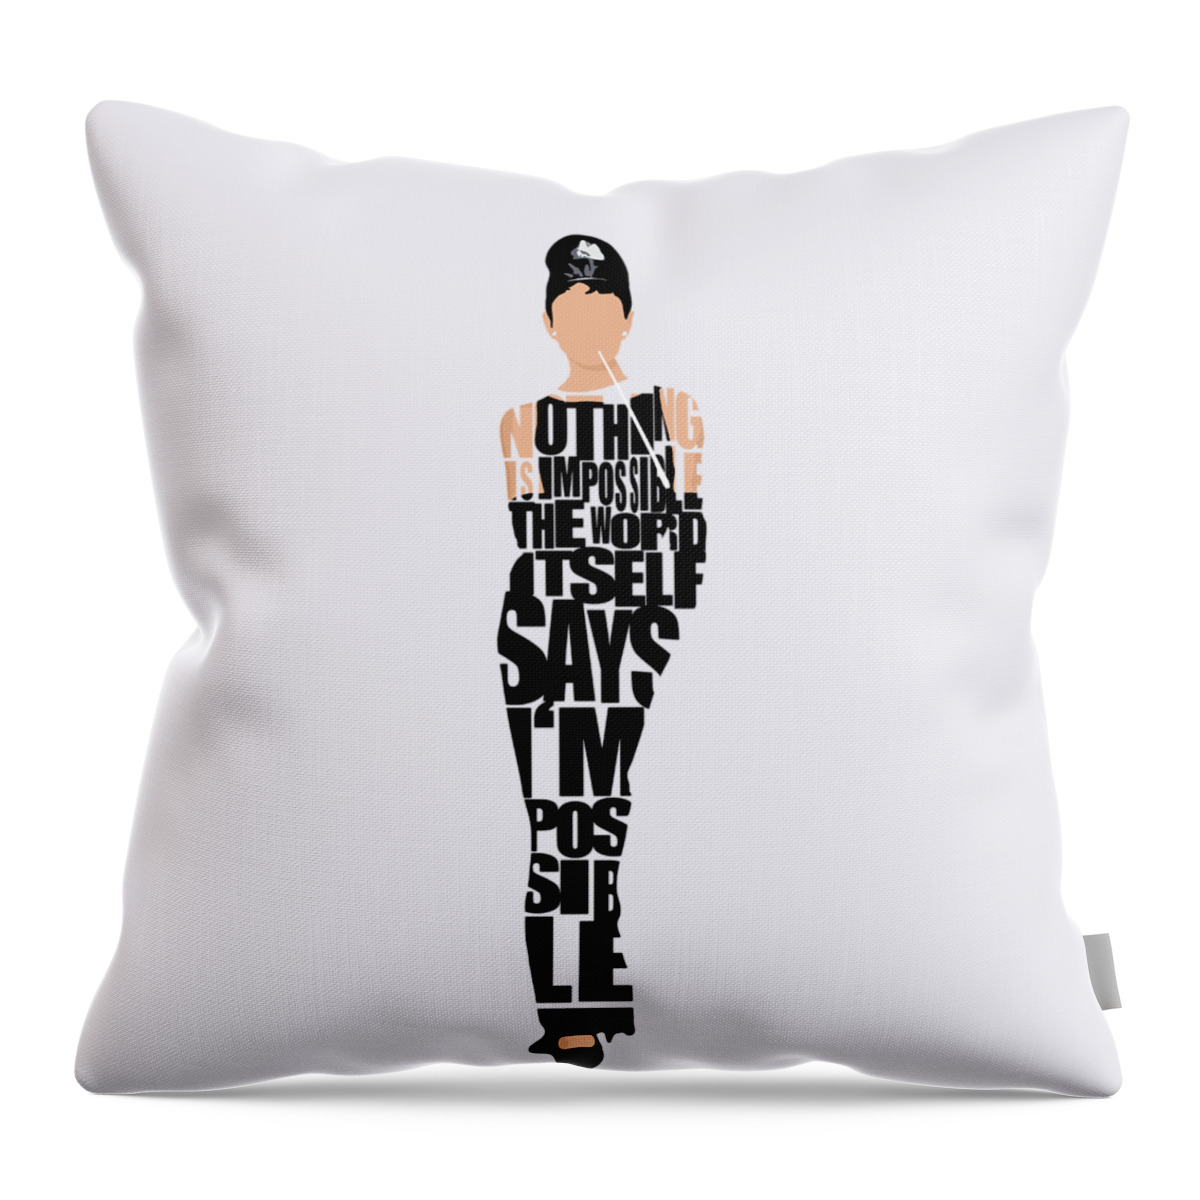 Audrey Hepburn Throw Pillow featuring the digital art Audrey Hepburn Typography Poster by Inspirowl Design